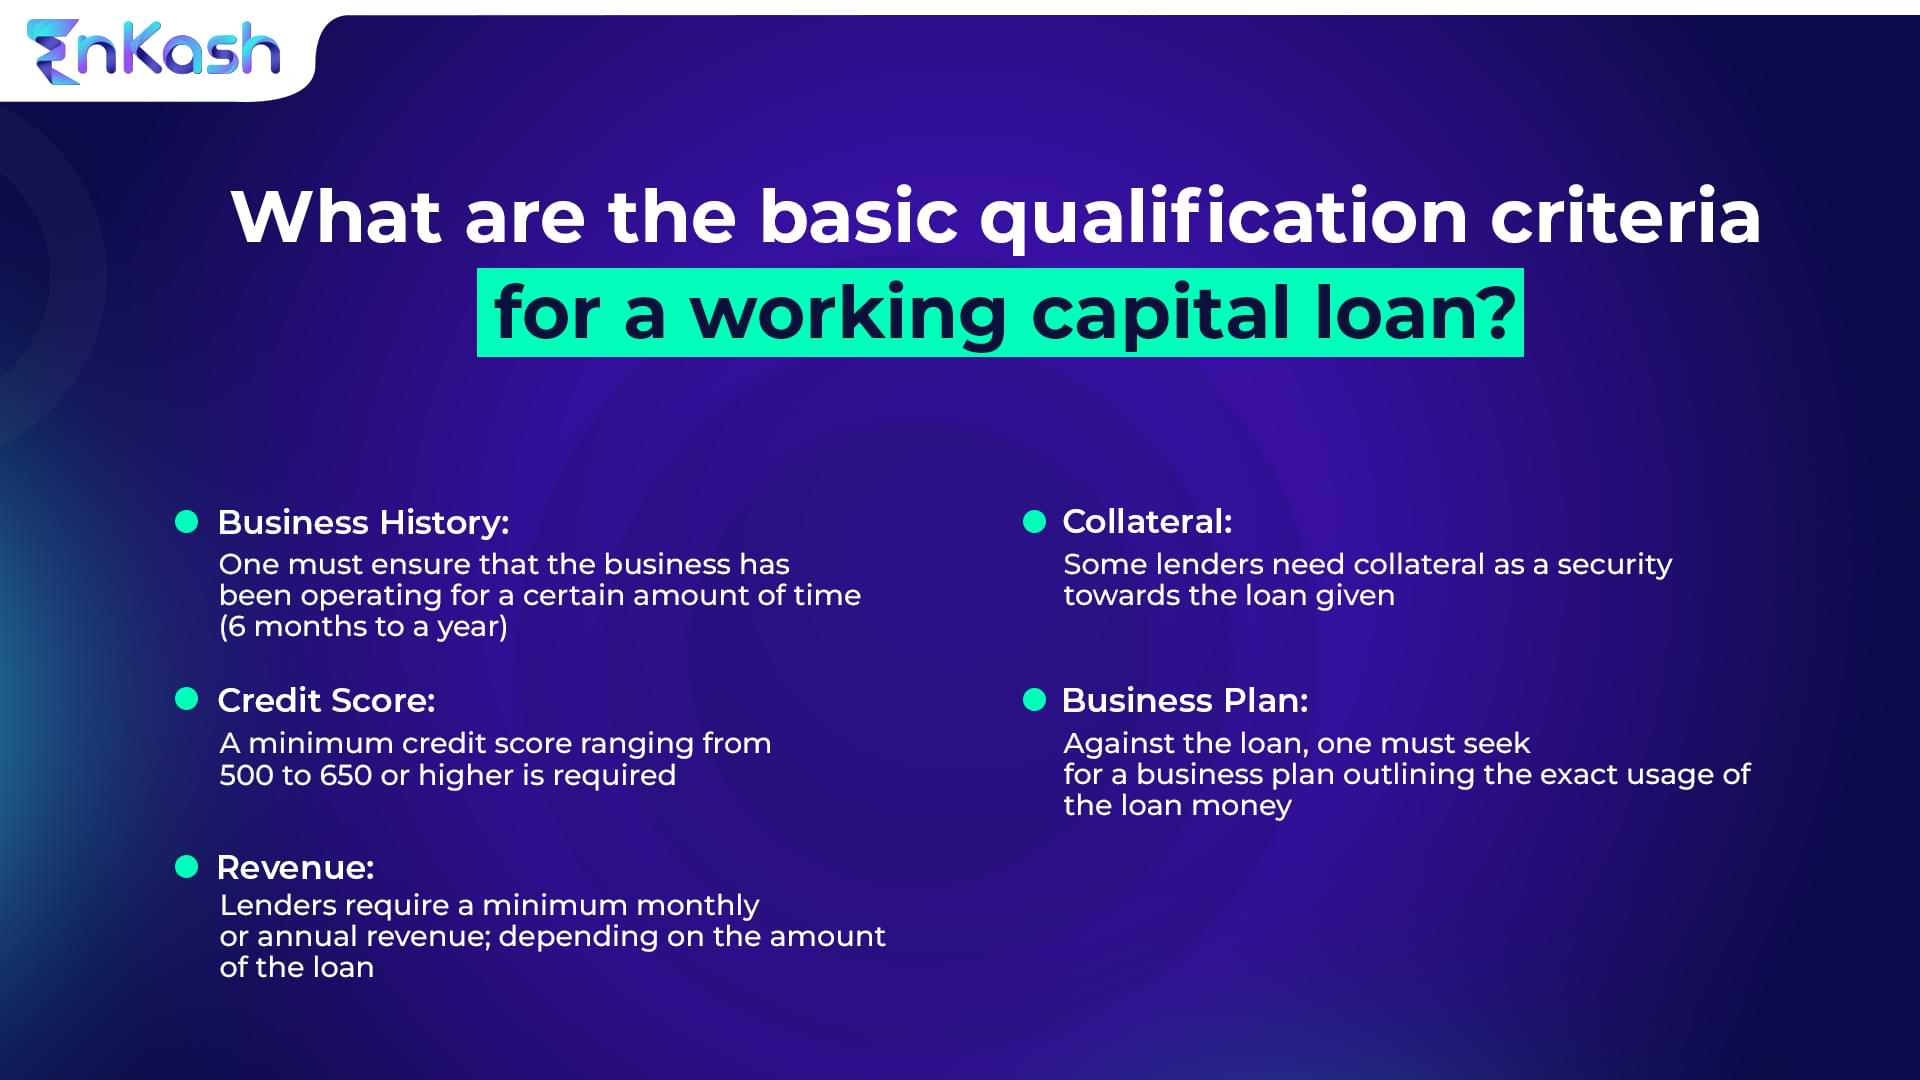 Criteria for working capital loan